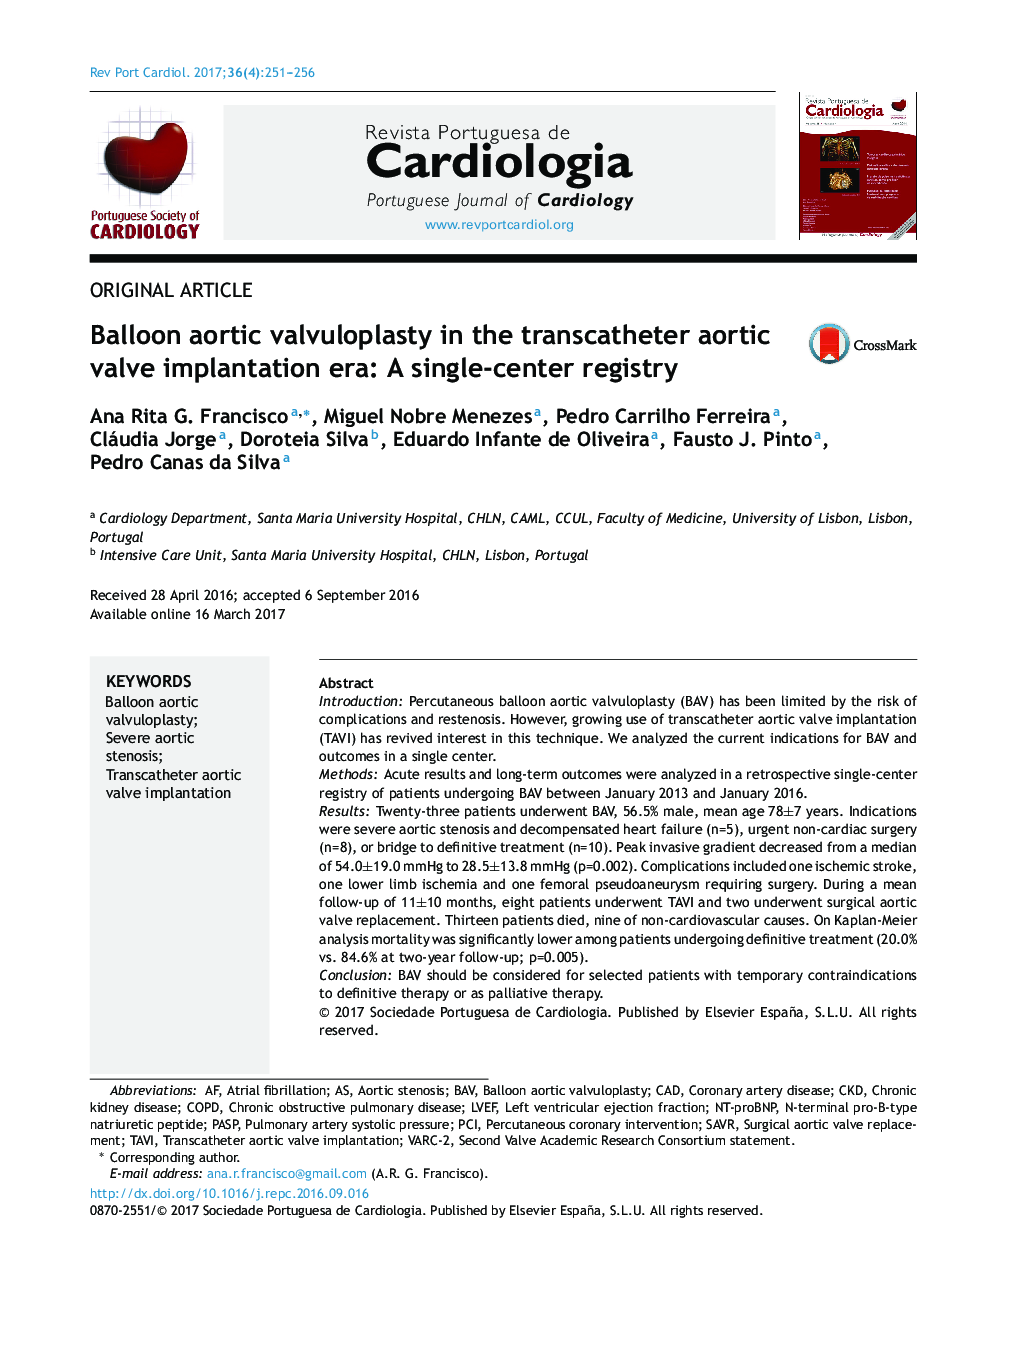 Balloon aortic valvuloplasty in the transcatheter aortic valve implantation era: A single-center registry